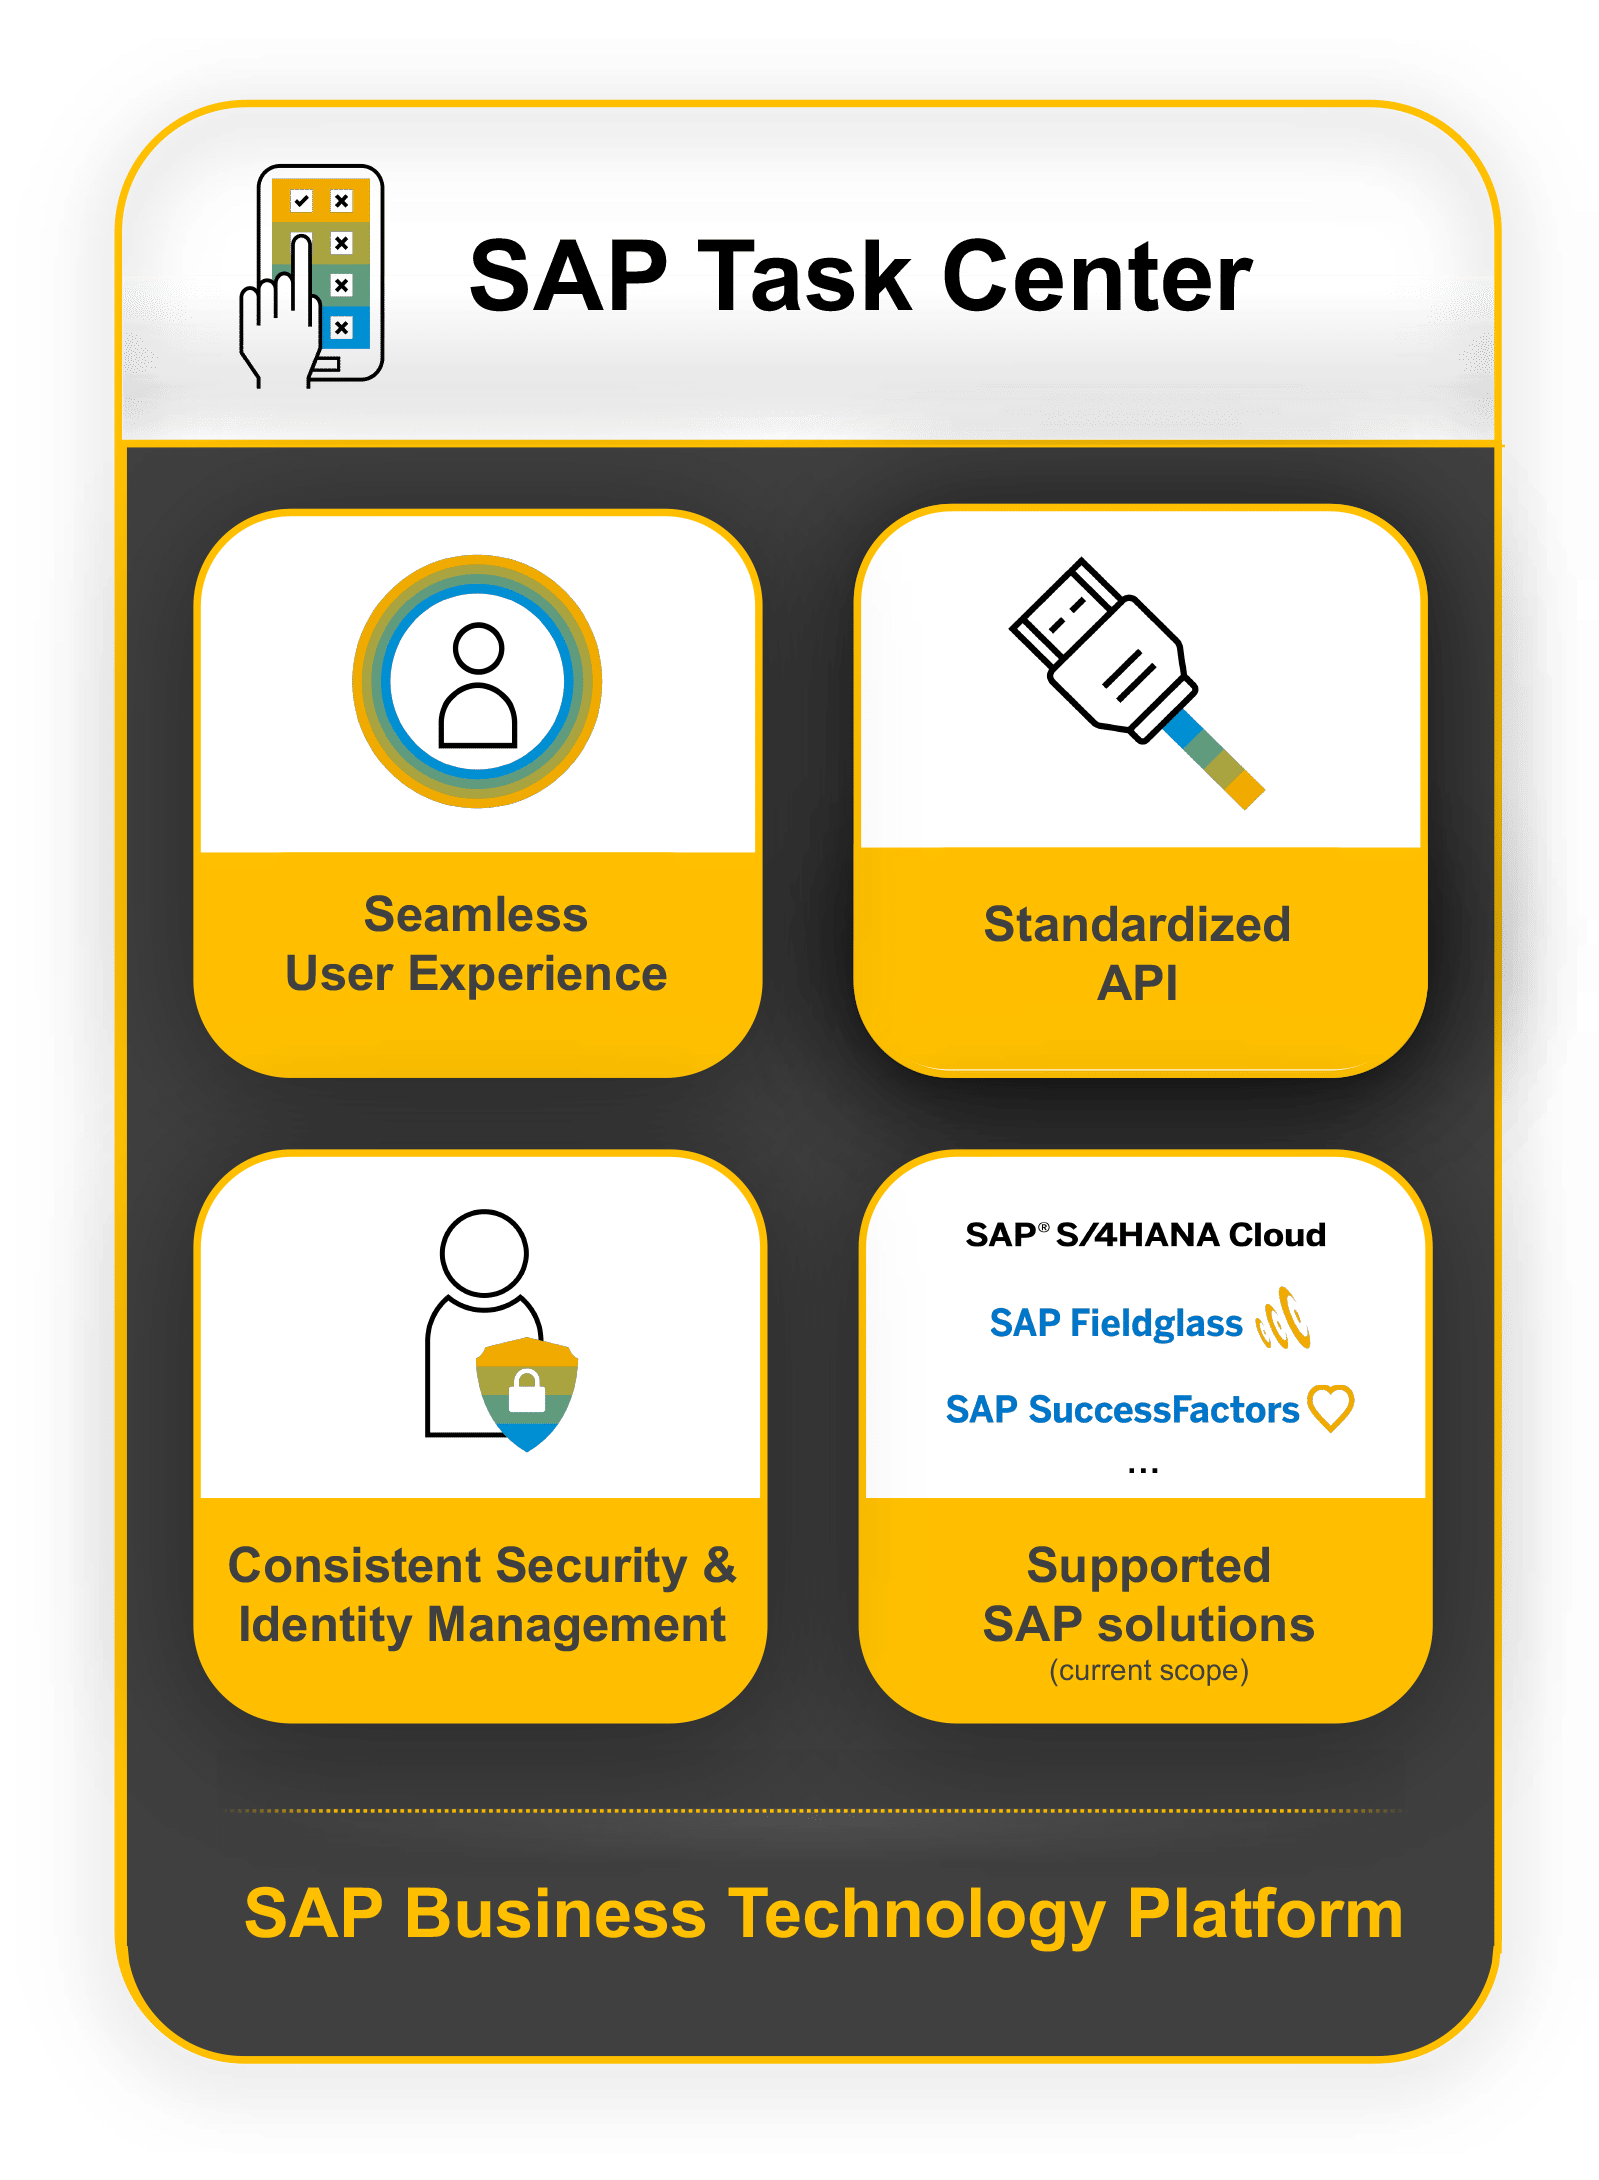 Graphic: SAP Task Center and SAP BTP